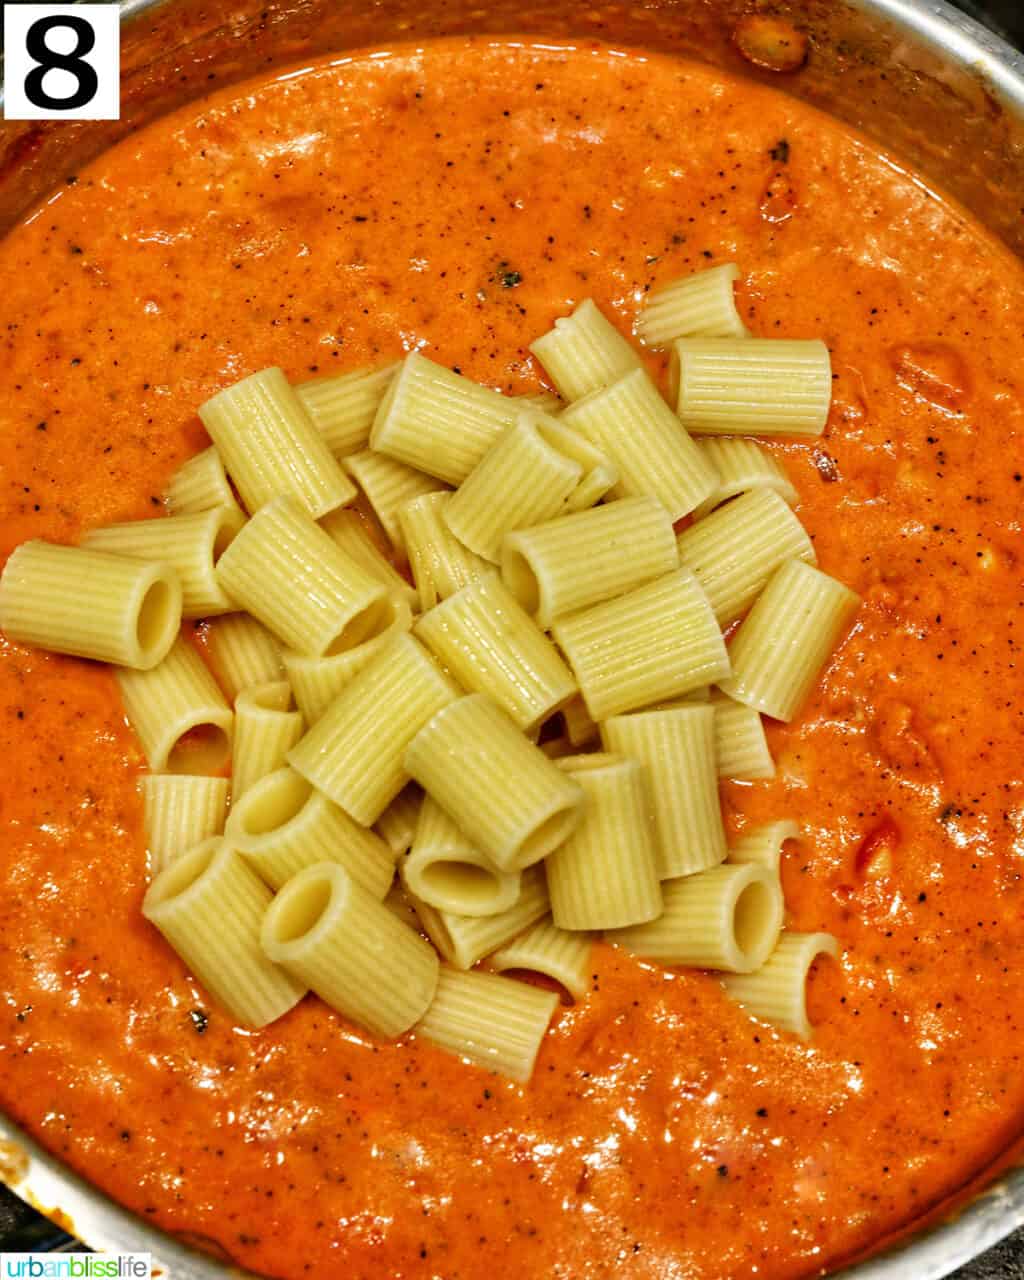 rigatoni added to tomato sauce in a saucepan.